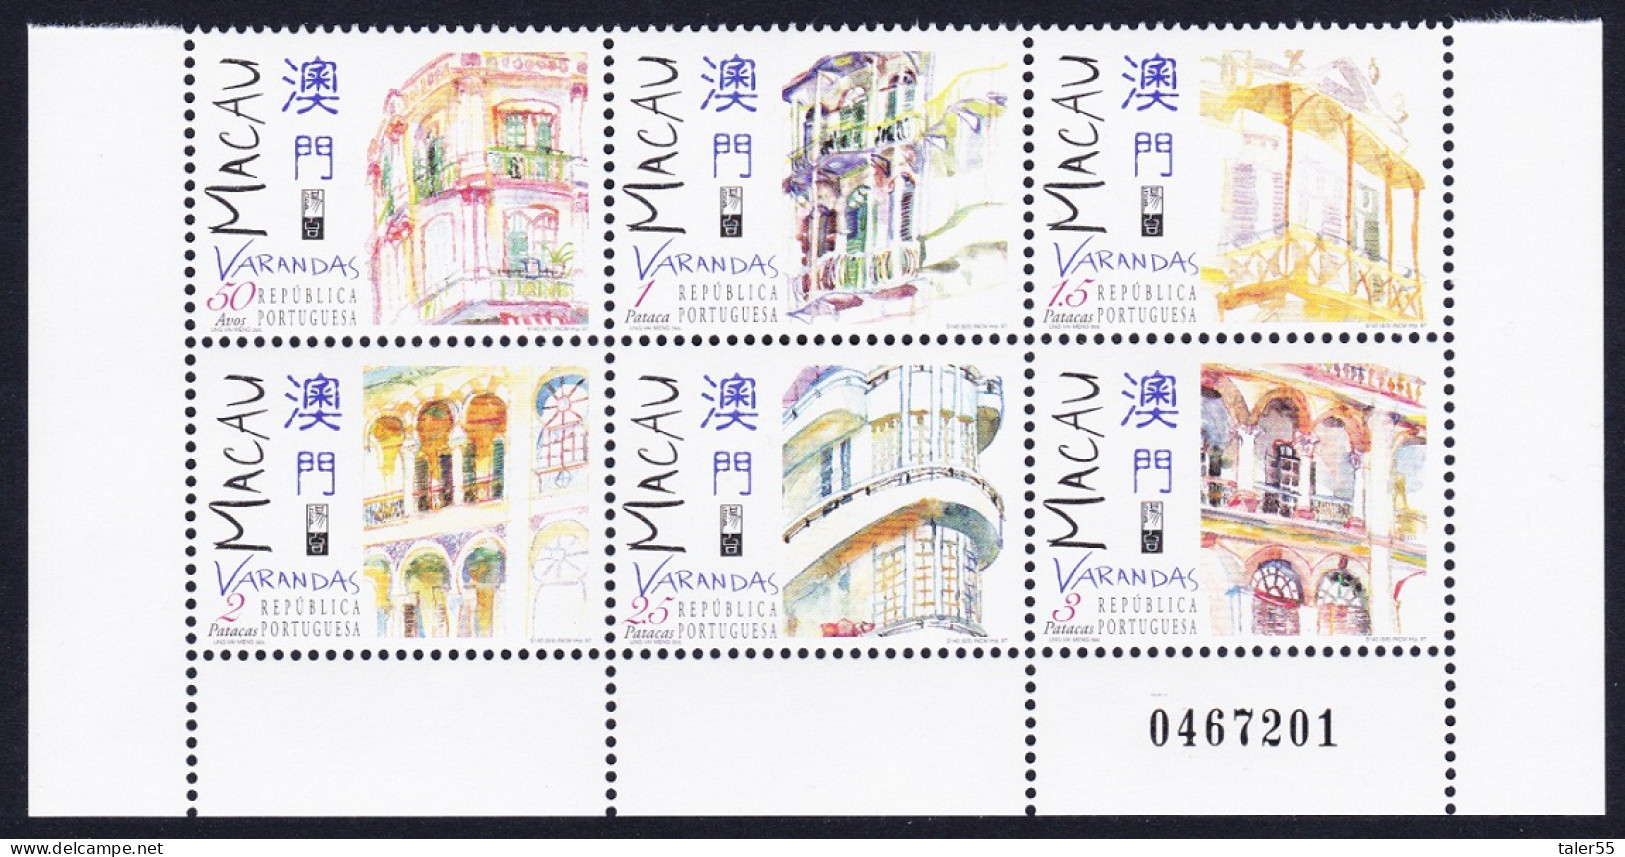 Macao Macau Balconies Block Of 6 Control Number 1997 MNH SG#1000-1005 MI#925-930 Sc#891a - Nuovi